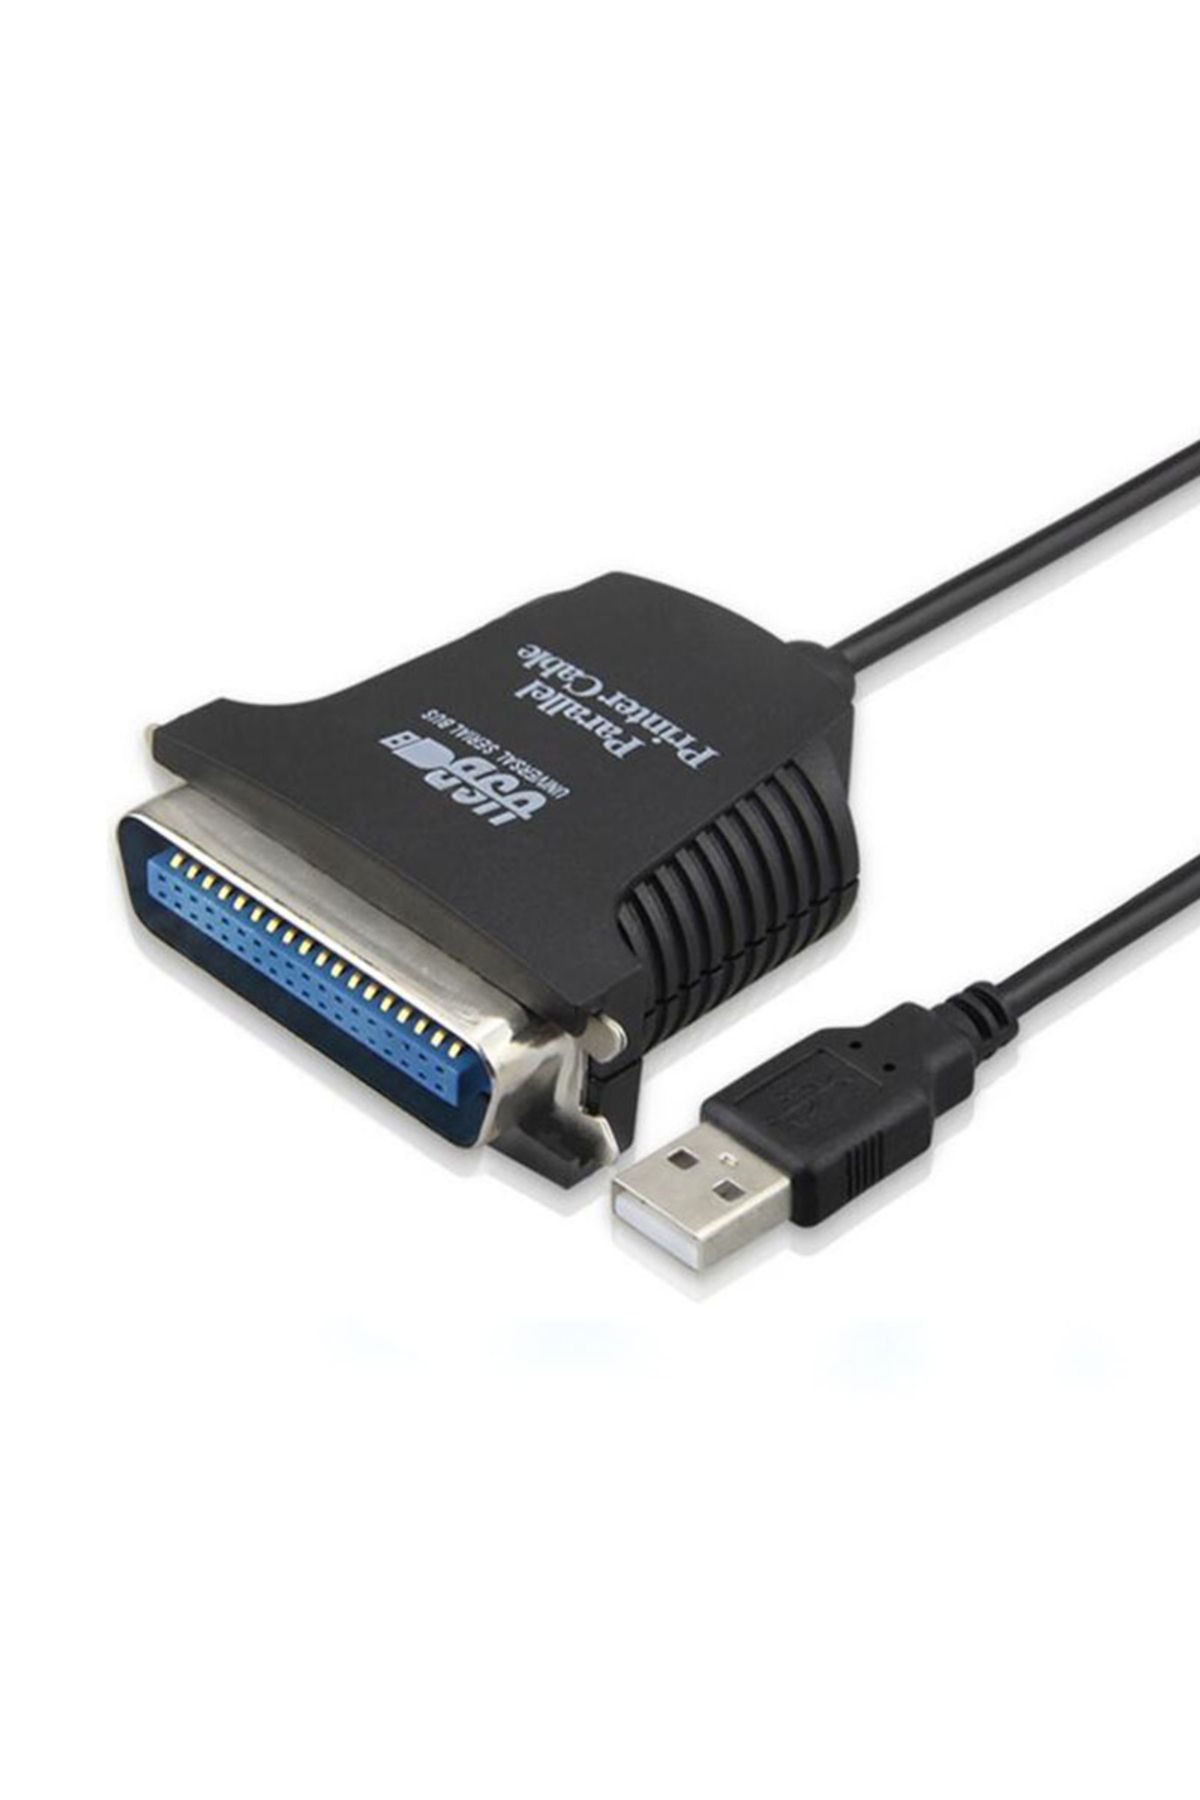 LAMFER Shopzum Pm-6492 Usb 2.0 To 1284 Prınter Kablo Shopzum 1.5 Metre (USB-LPT)